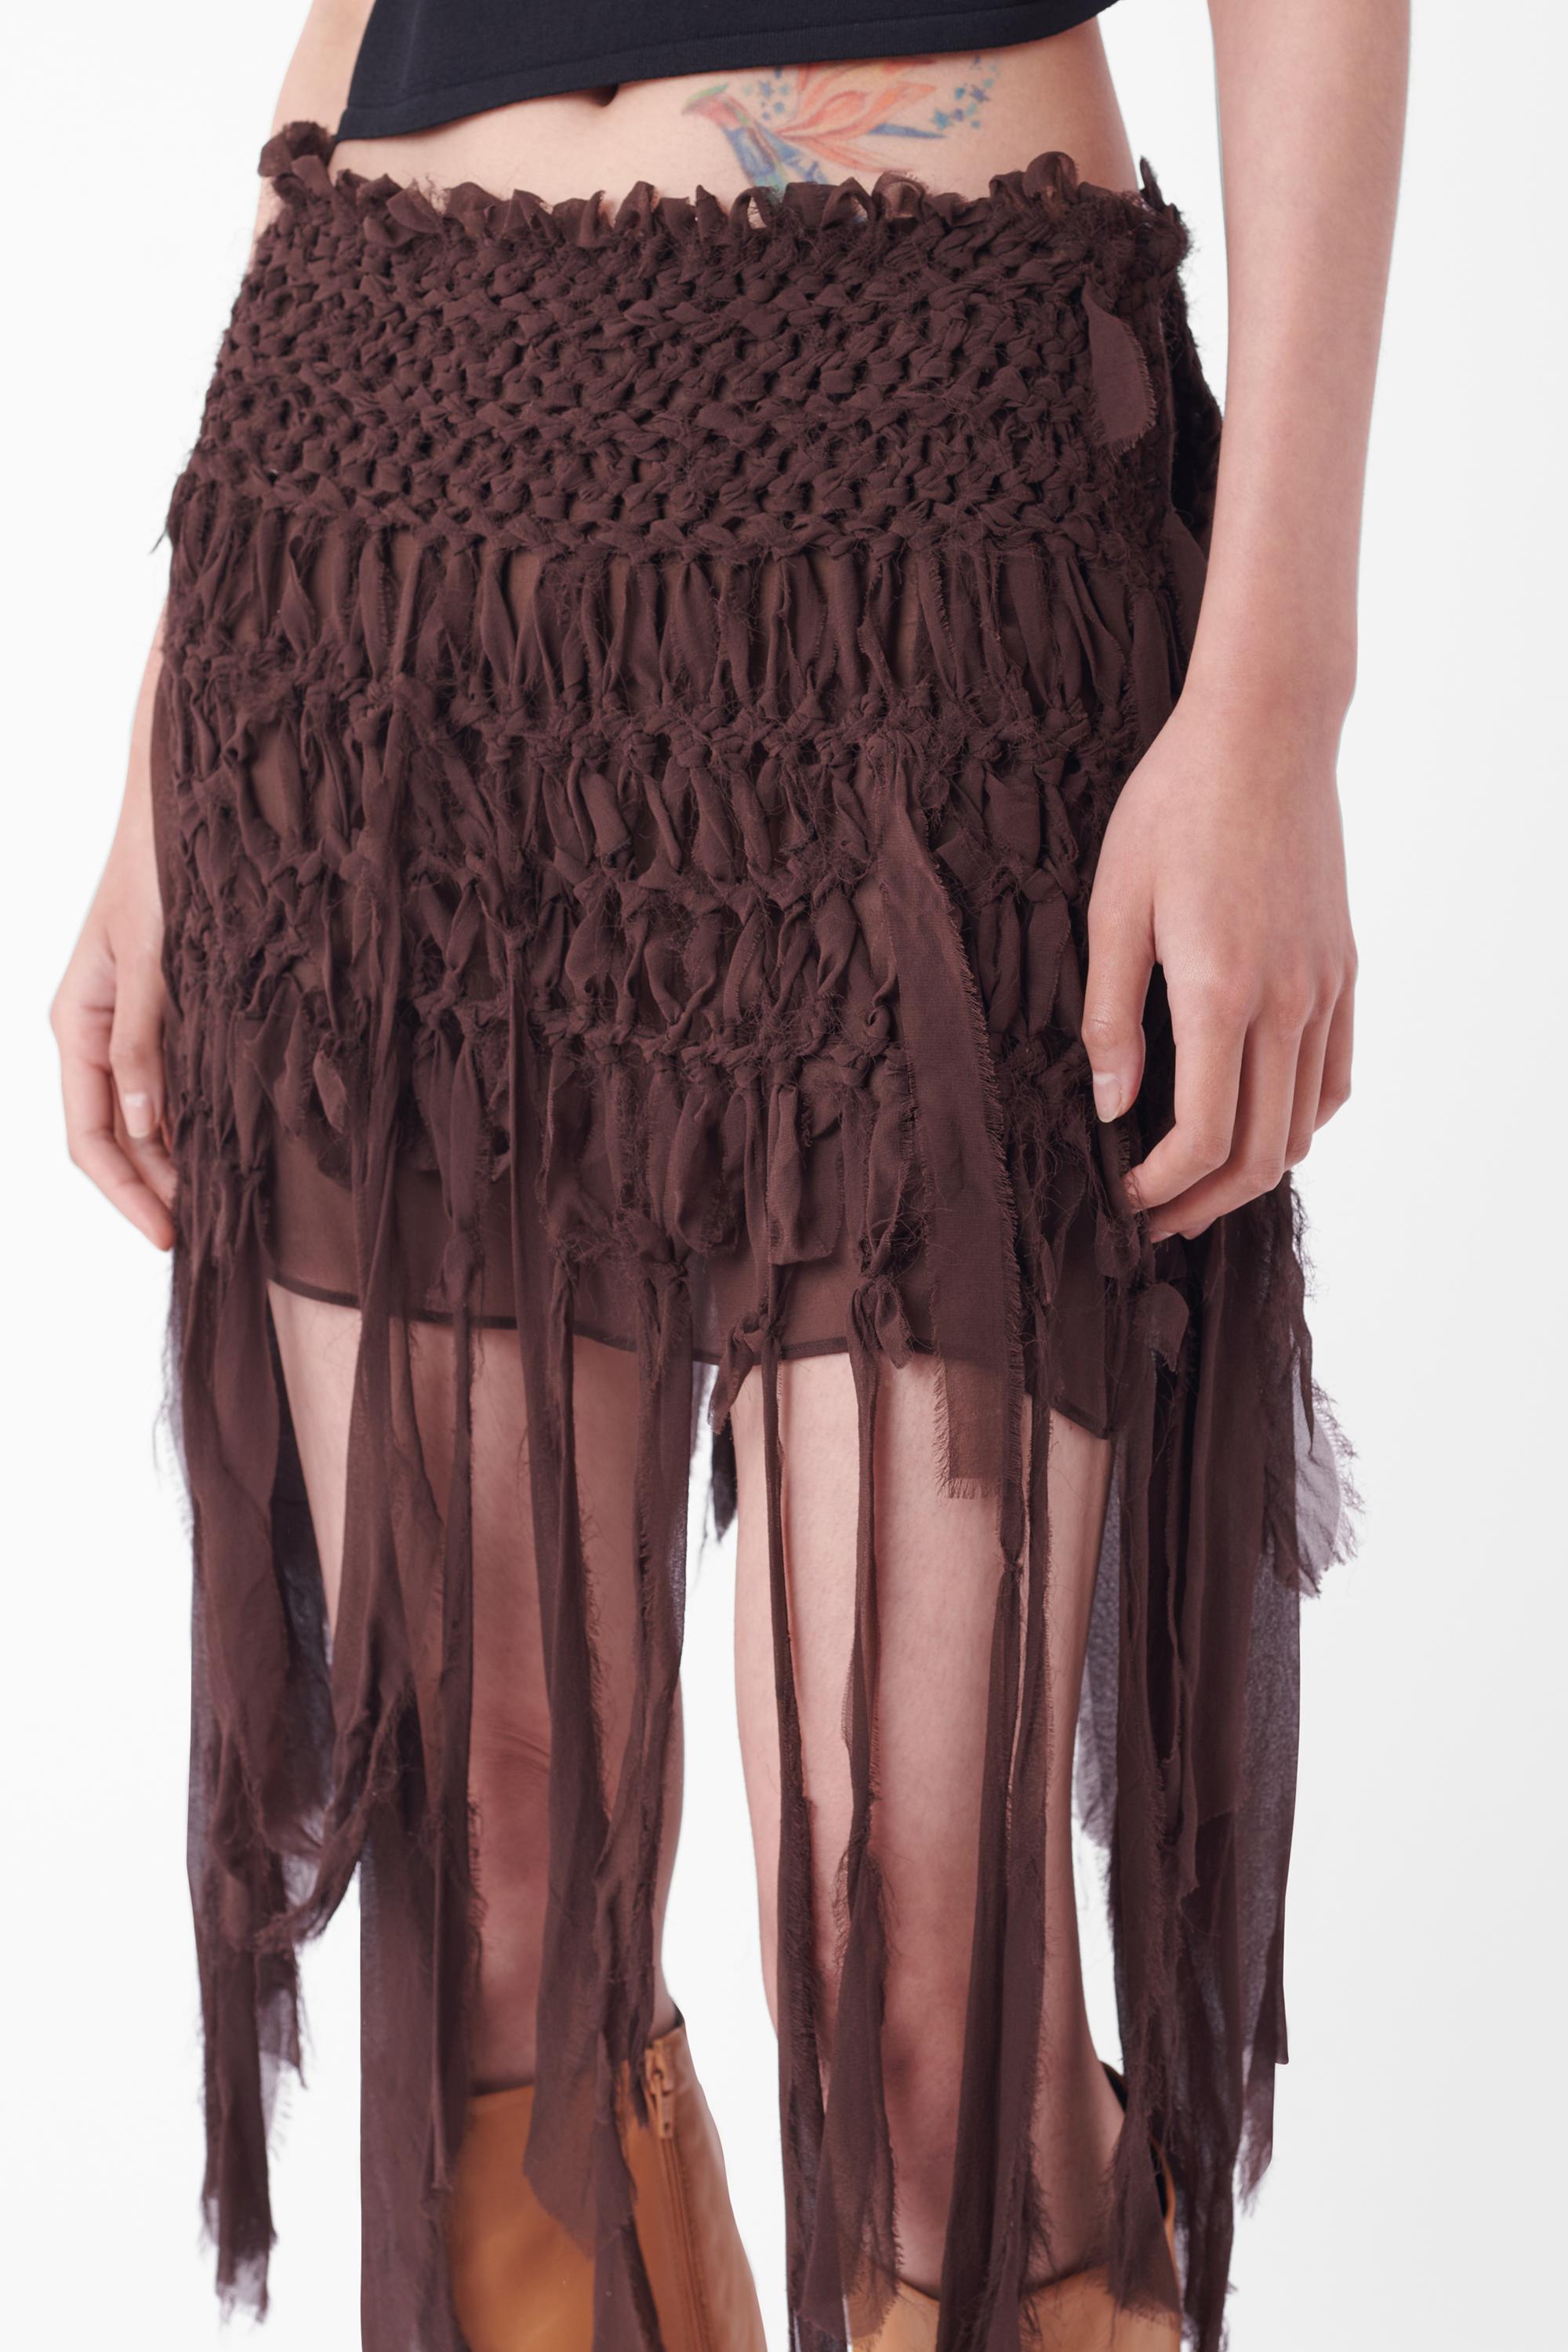 Yves Saint Laurent Vintage S/S 2002 Runway Brown Mombasa Silk Safari Skirt In Good Condition For Sale In London, GB